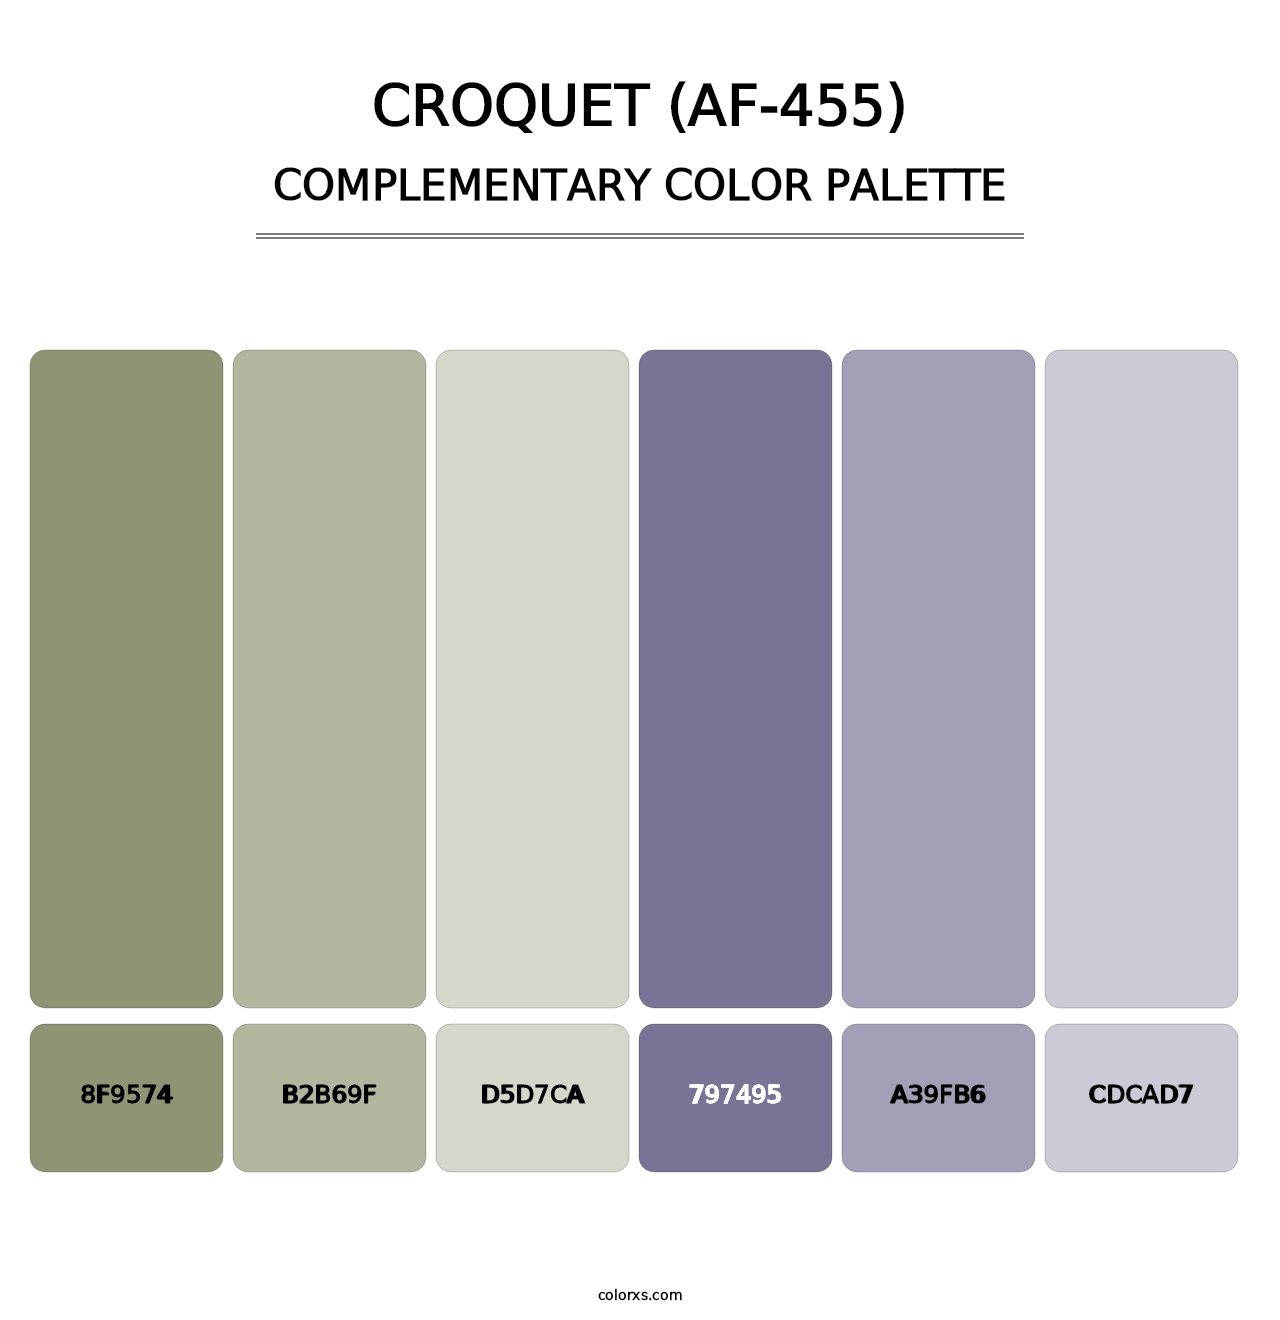 Croquet (AF-455) - Complementary Color Palette